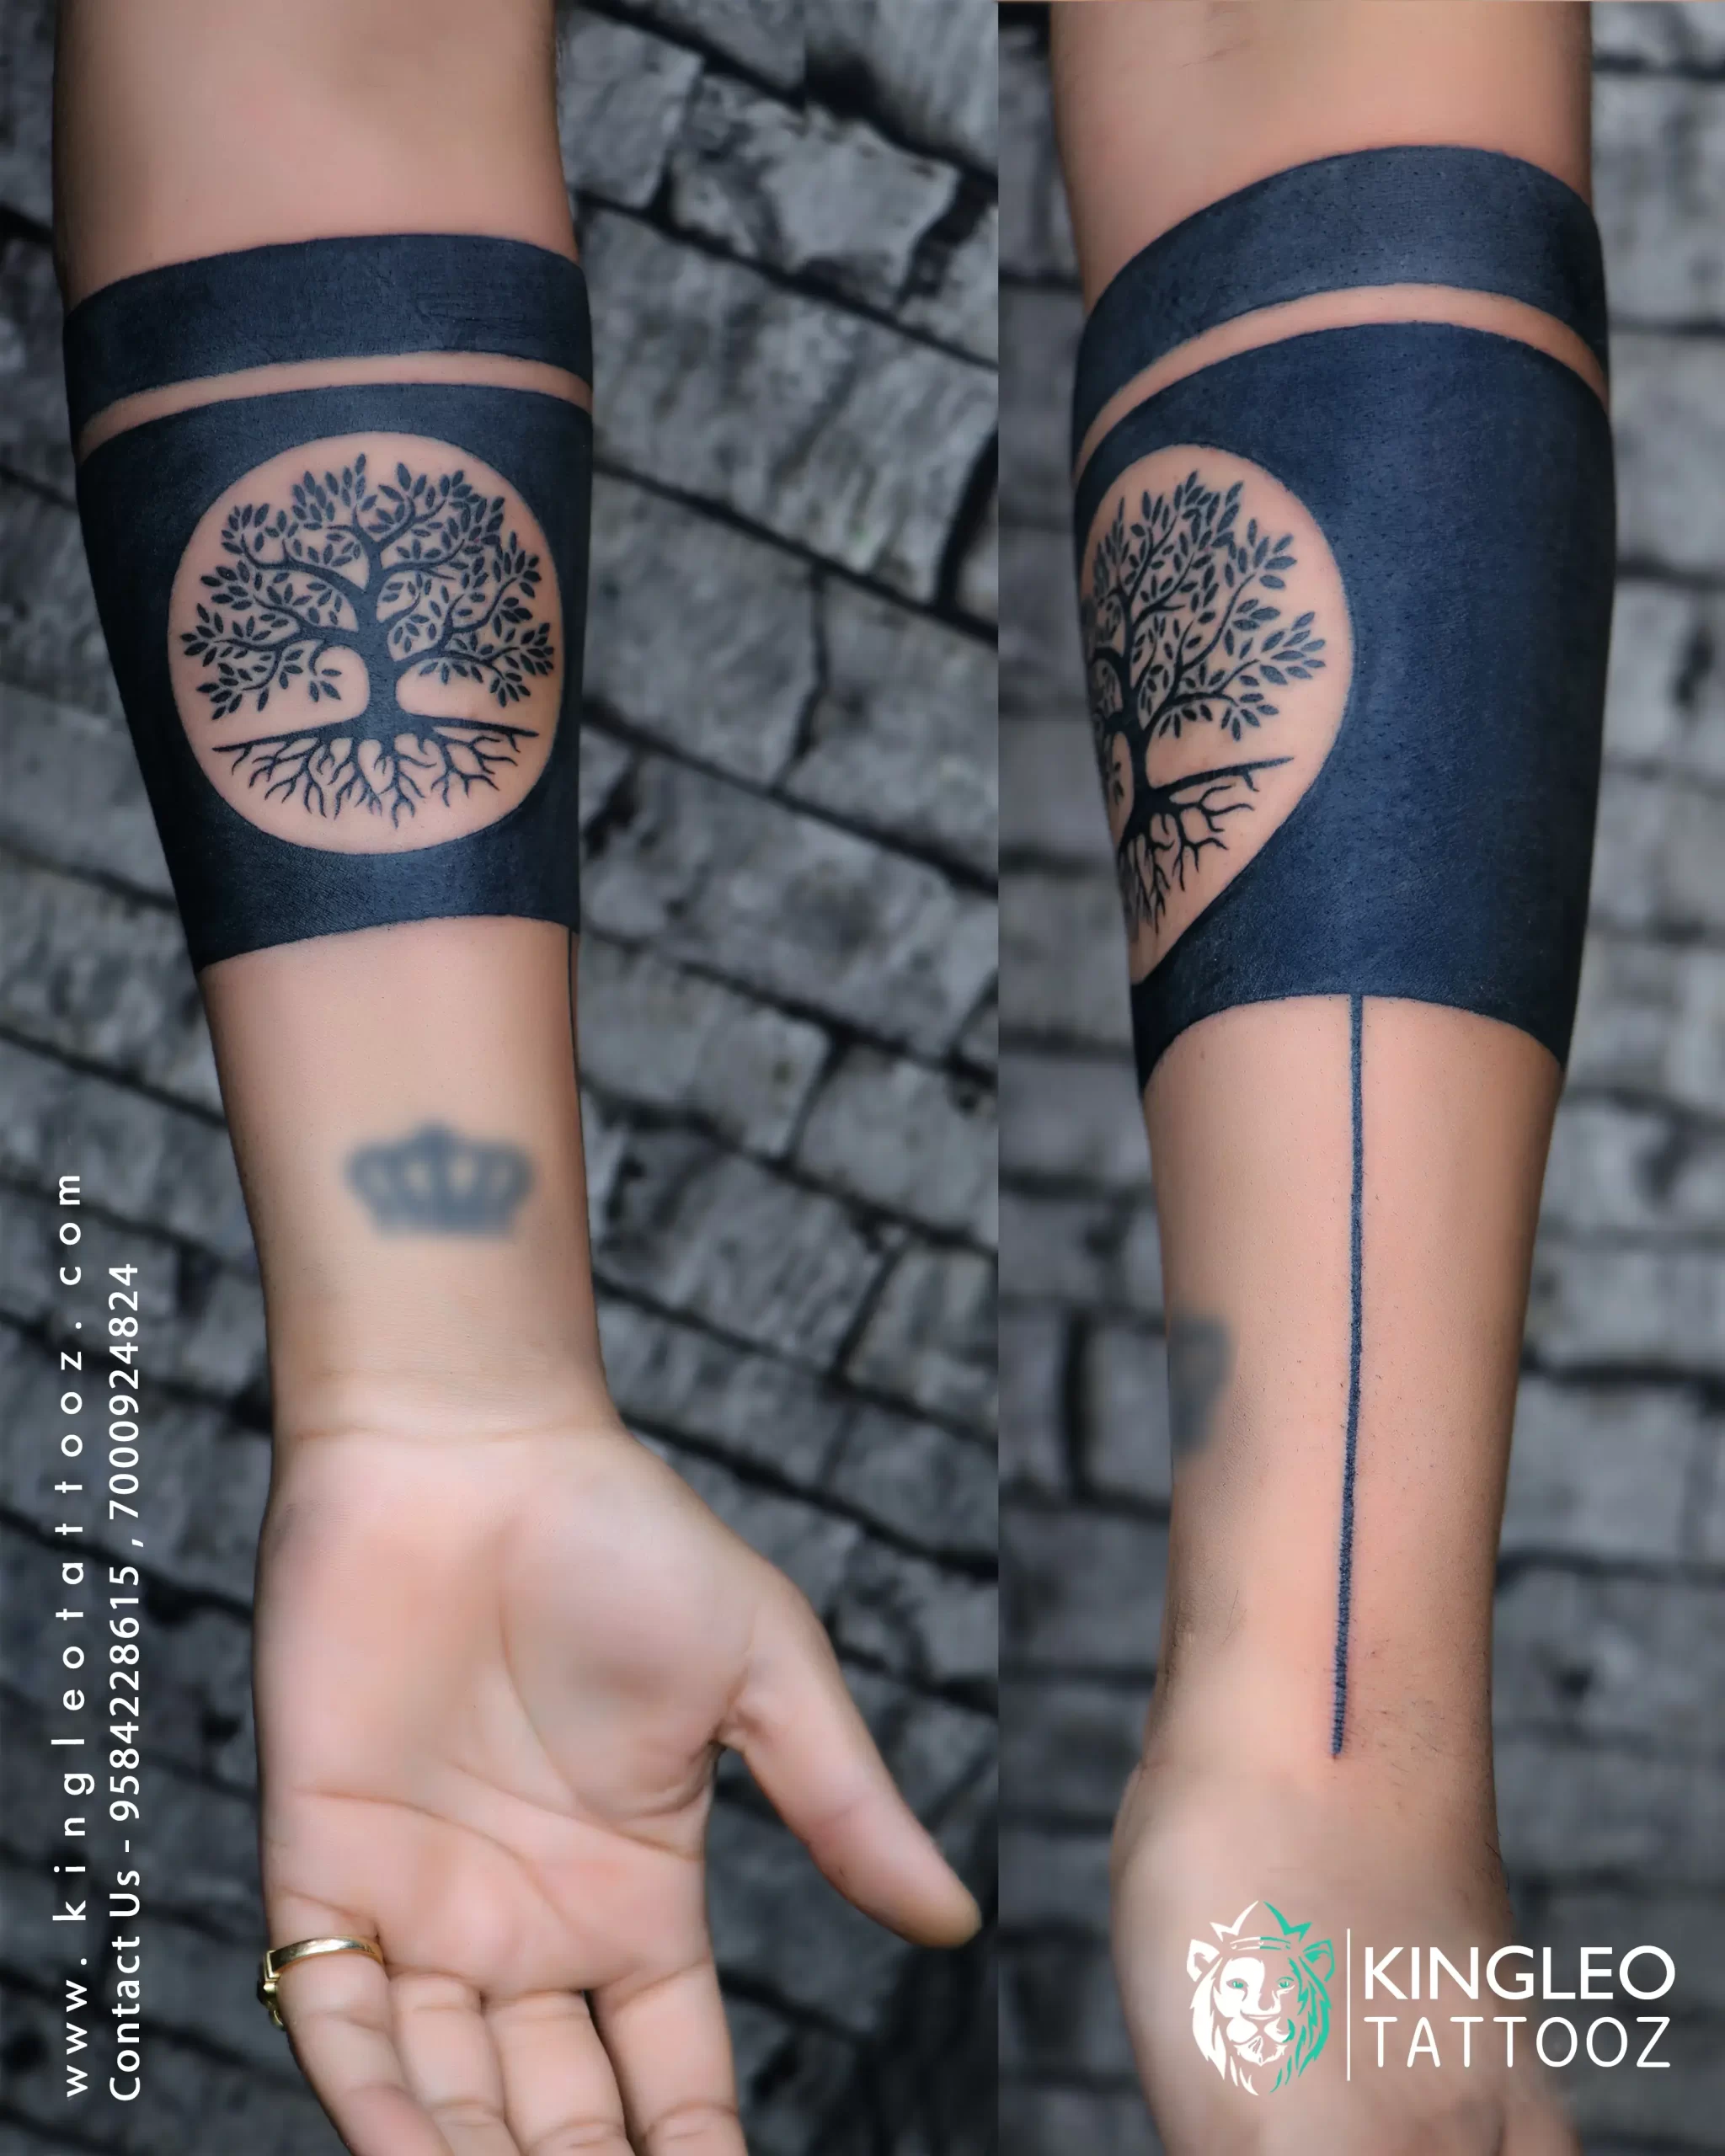 Earthy goddess | Tattoos, Tattoo designs, Life tattoos